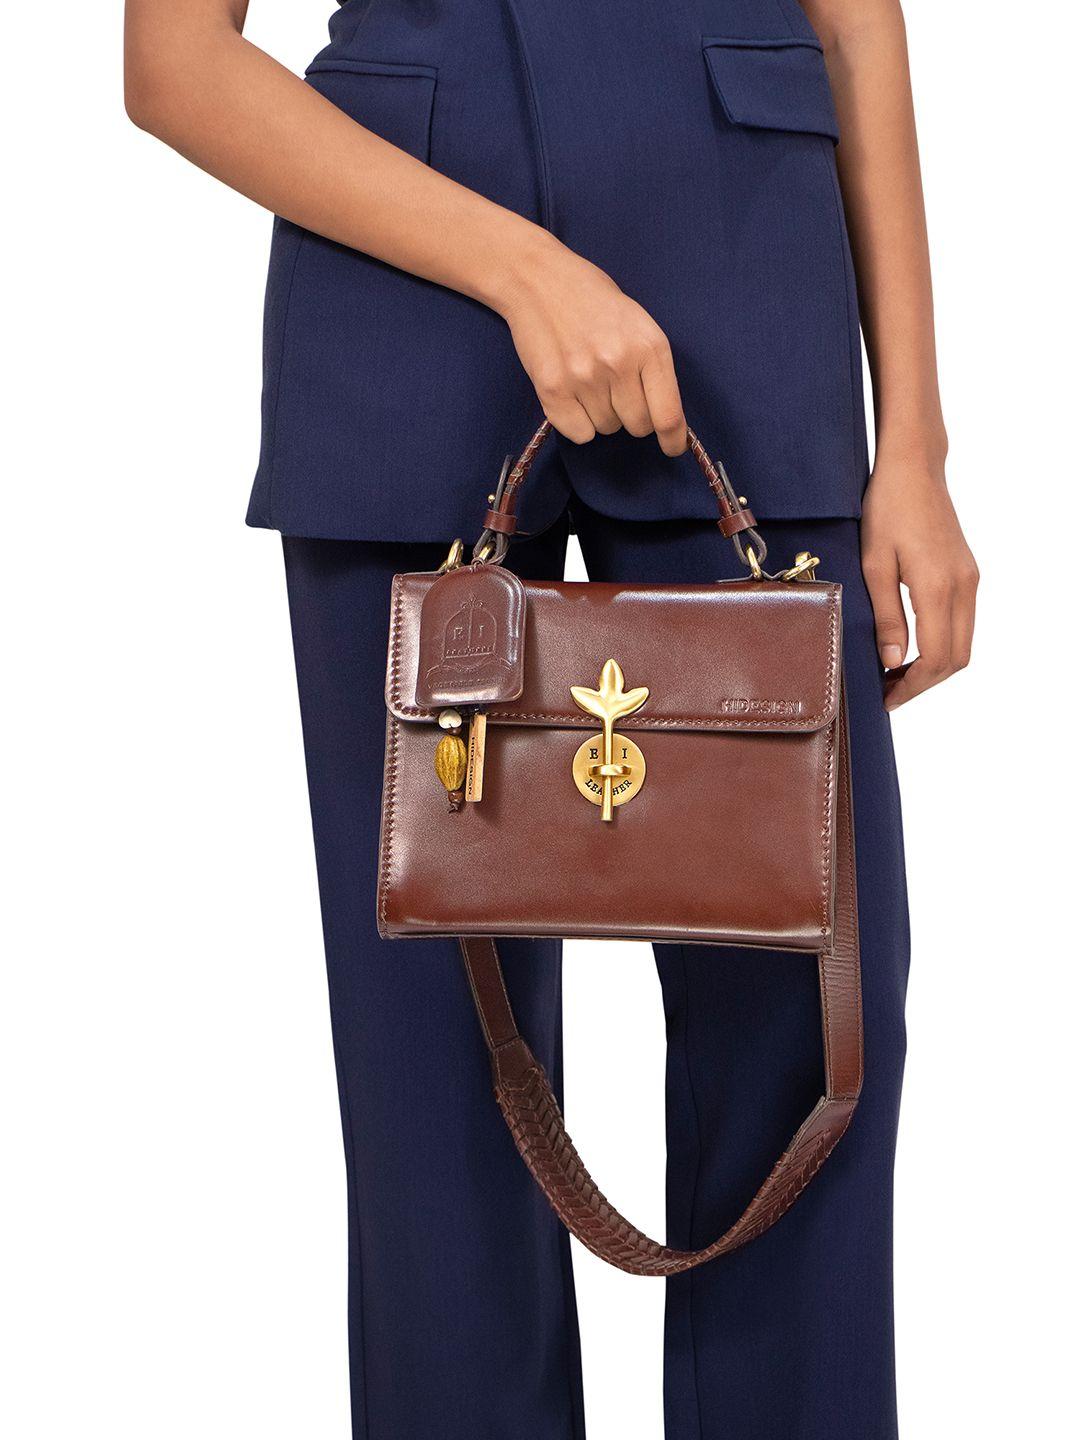 hidesign textured structured leather satchel bag